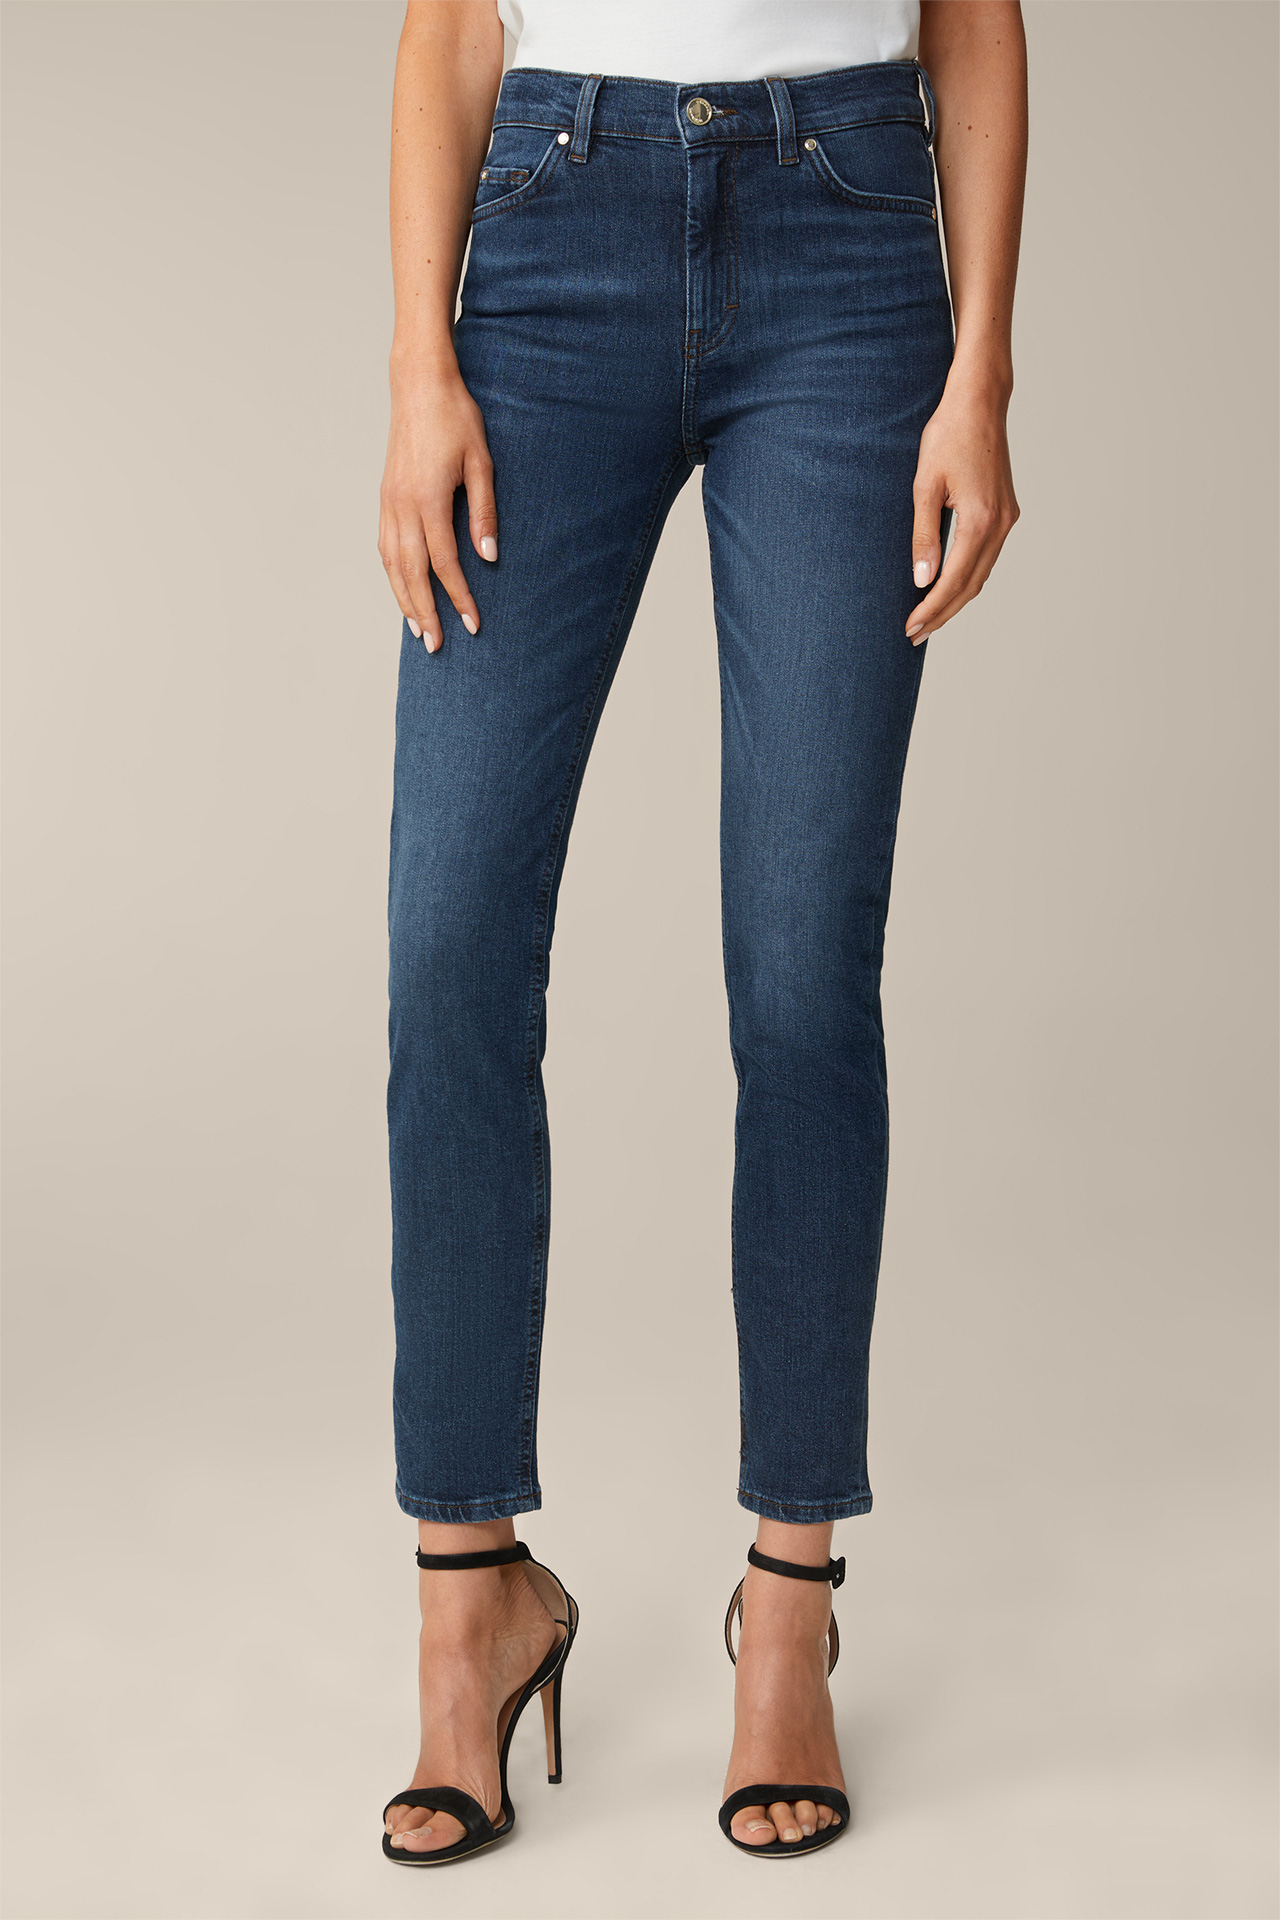 Jeans-Hose im Slim Fit in Blue washed